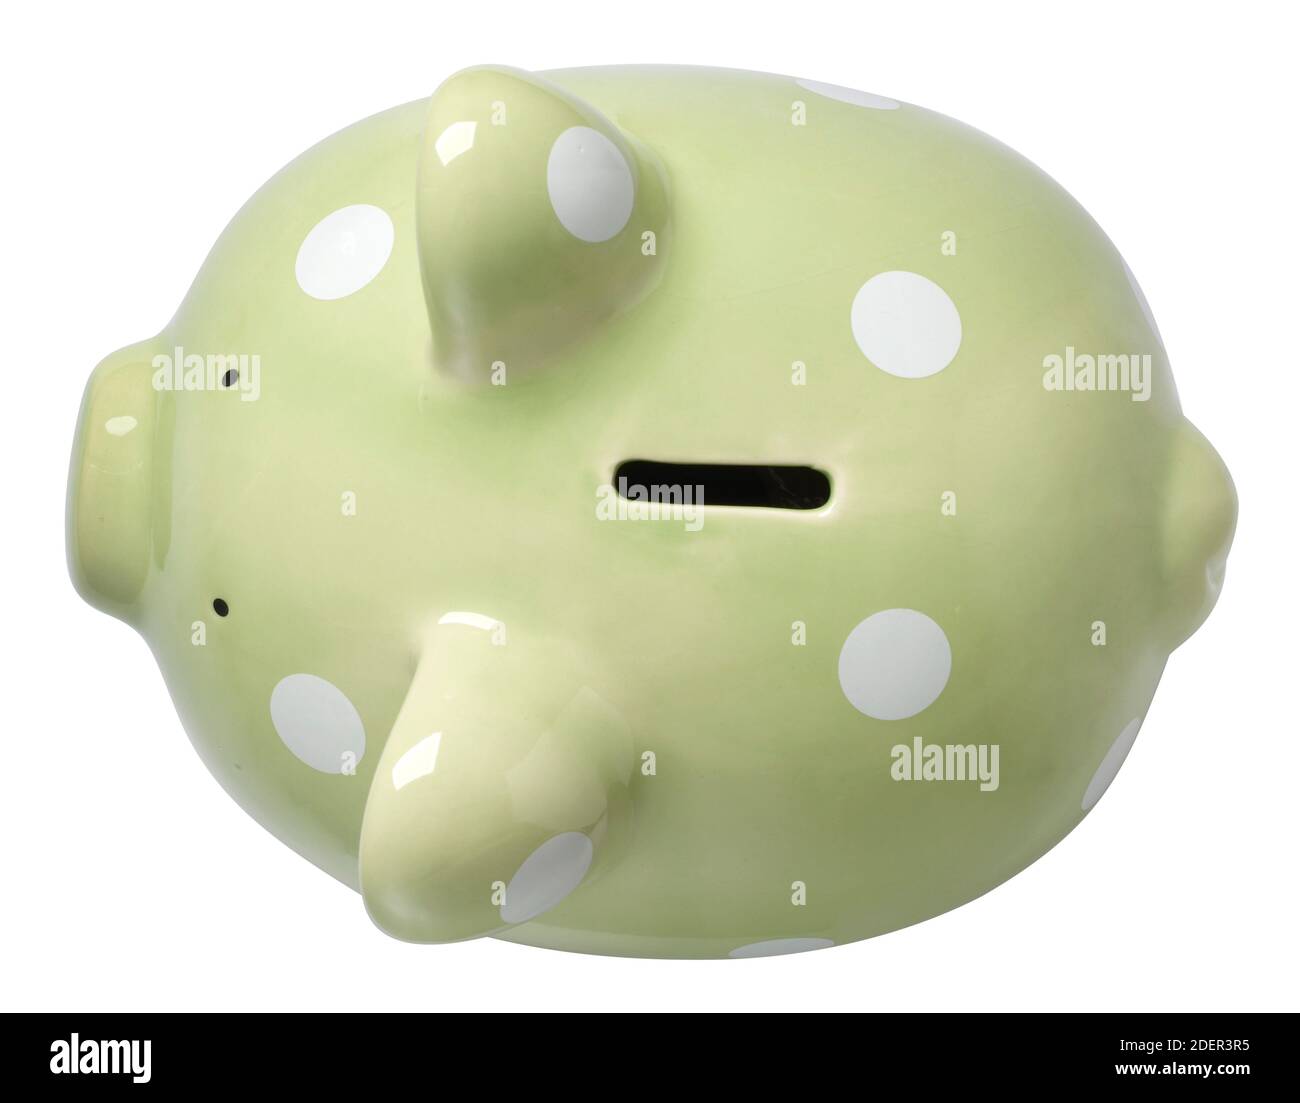 Green and white ceramic piggy bank Stock Photo